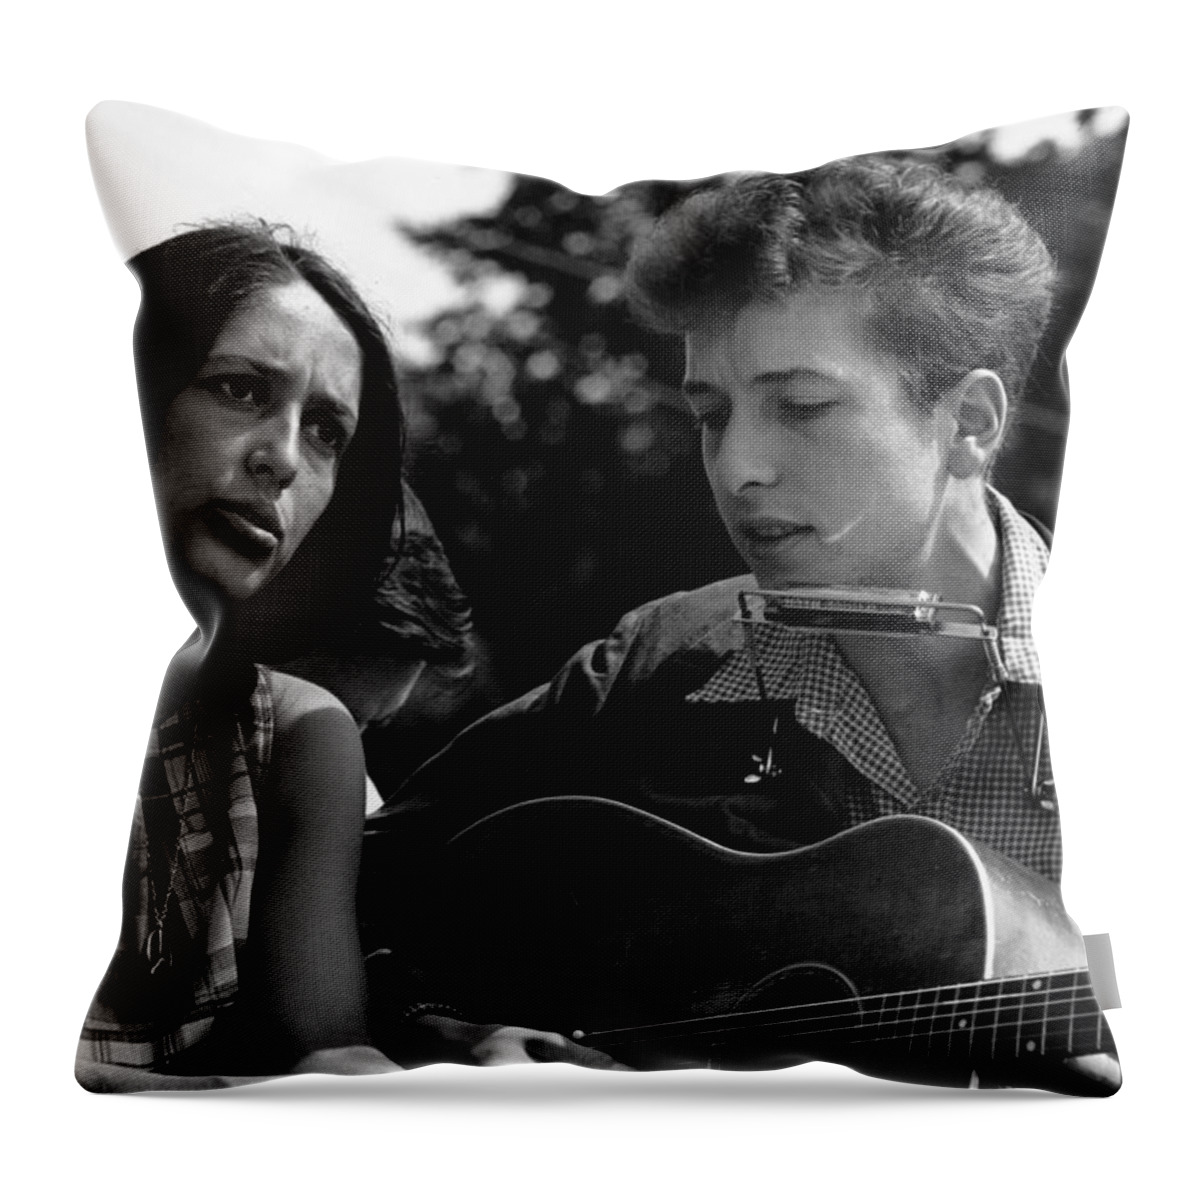 Bob Dylan Throw Pillow featuring the photograph Bob Dylan and Joan Baez by Georgia Fowler